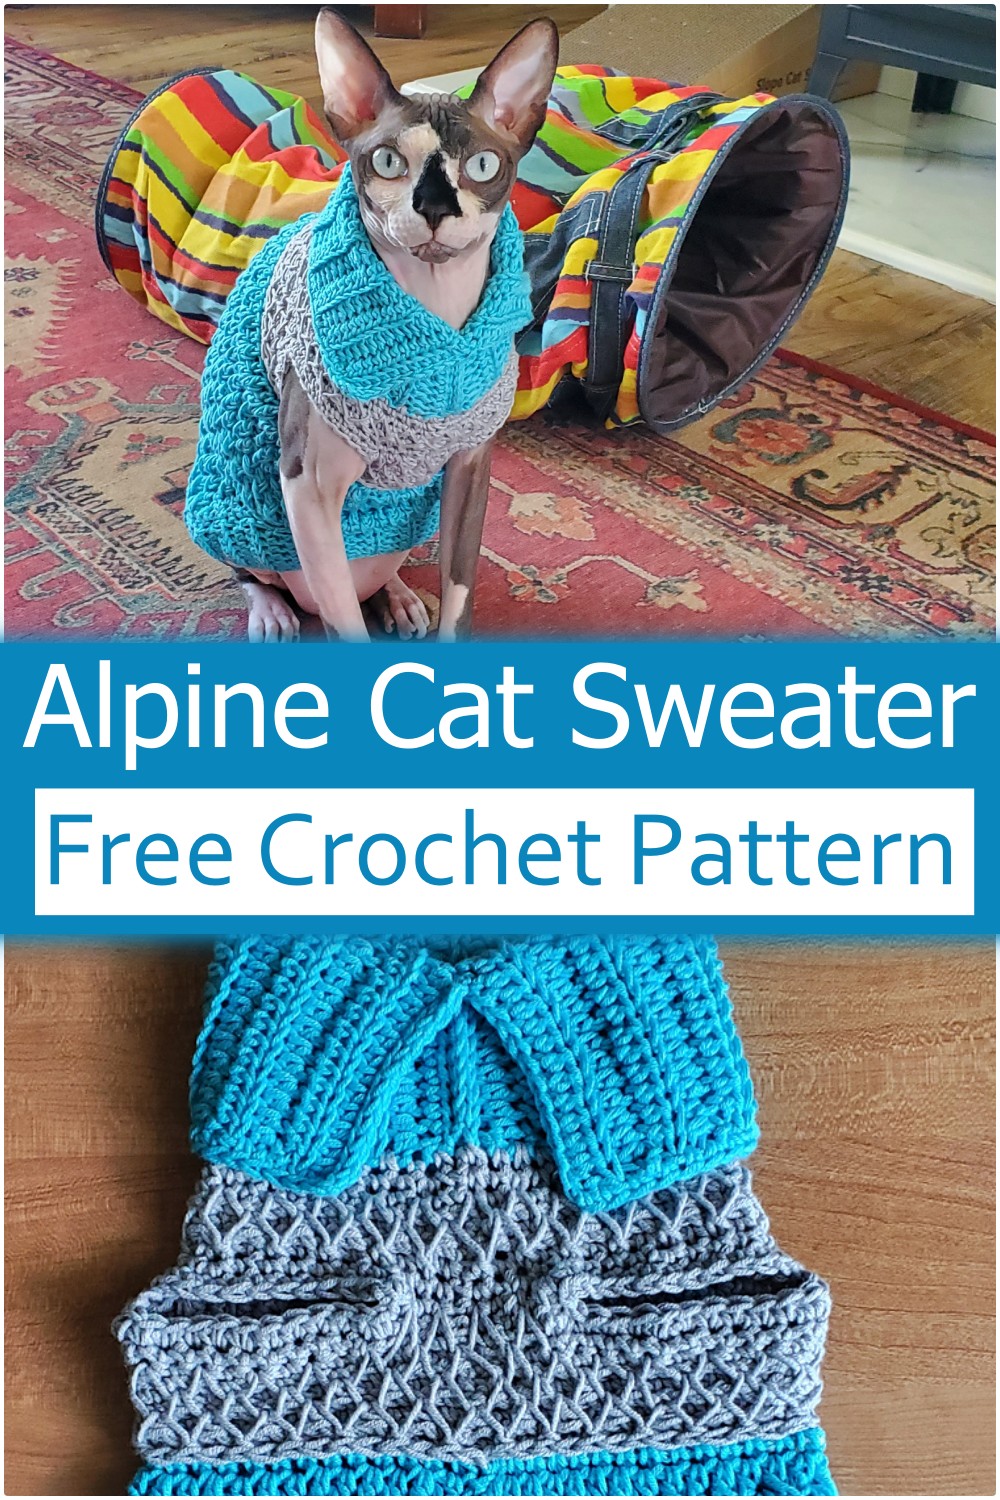 Alpine Crochet Cat Sweater